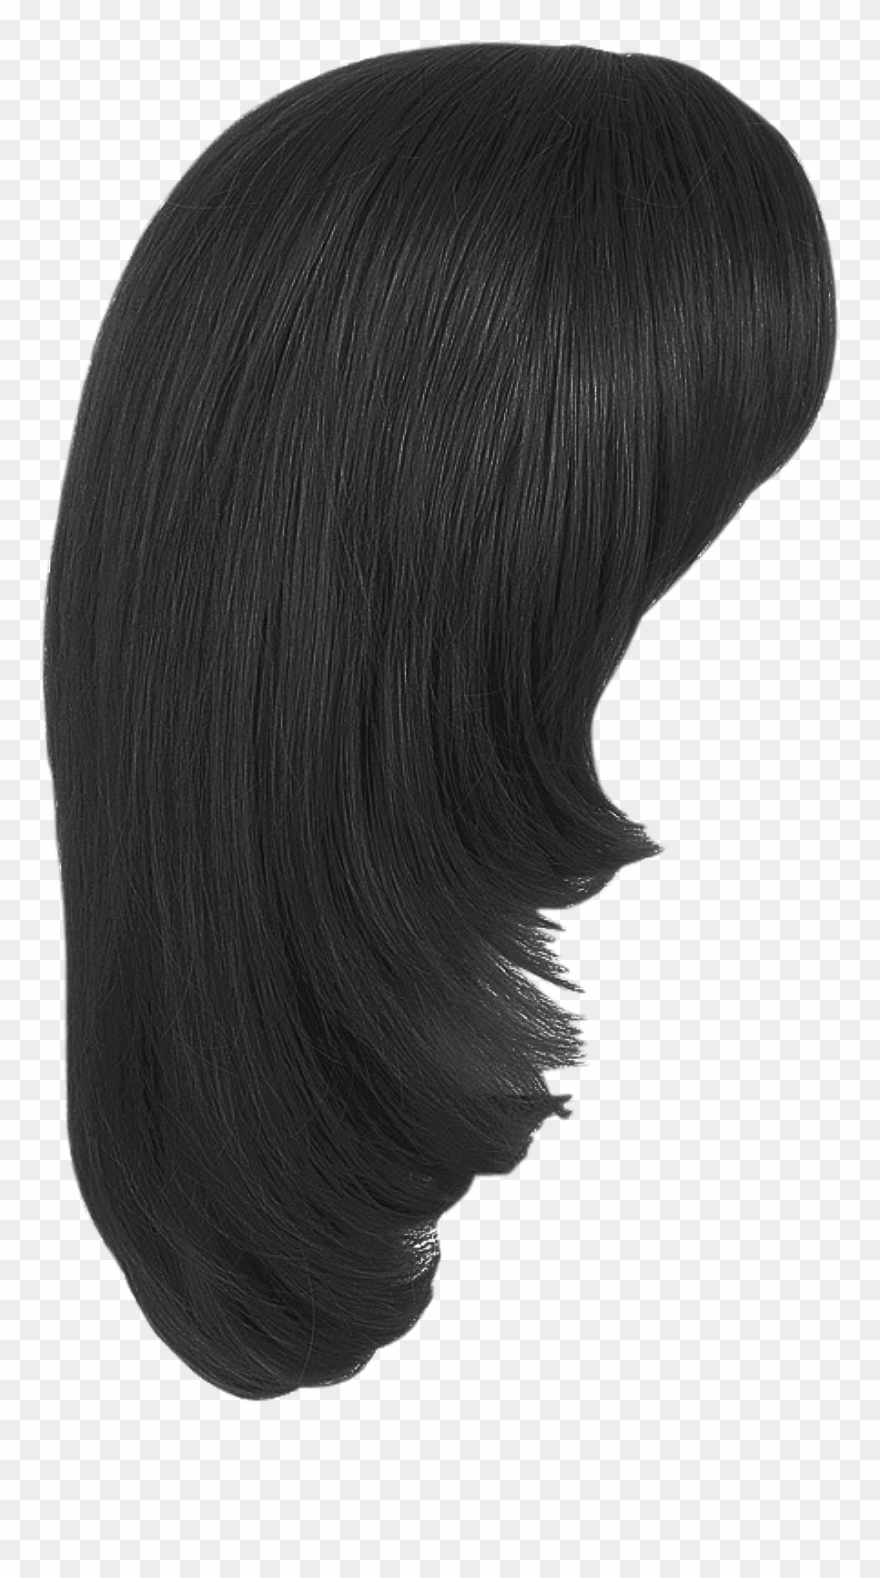 Girl Hair Png Transparent Image.